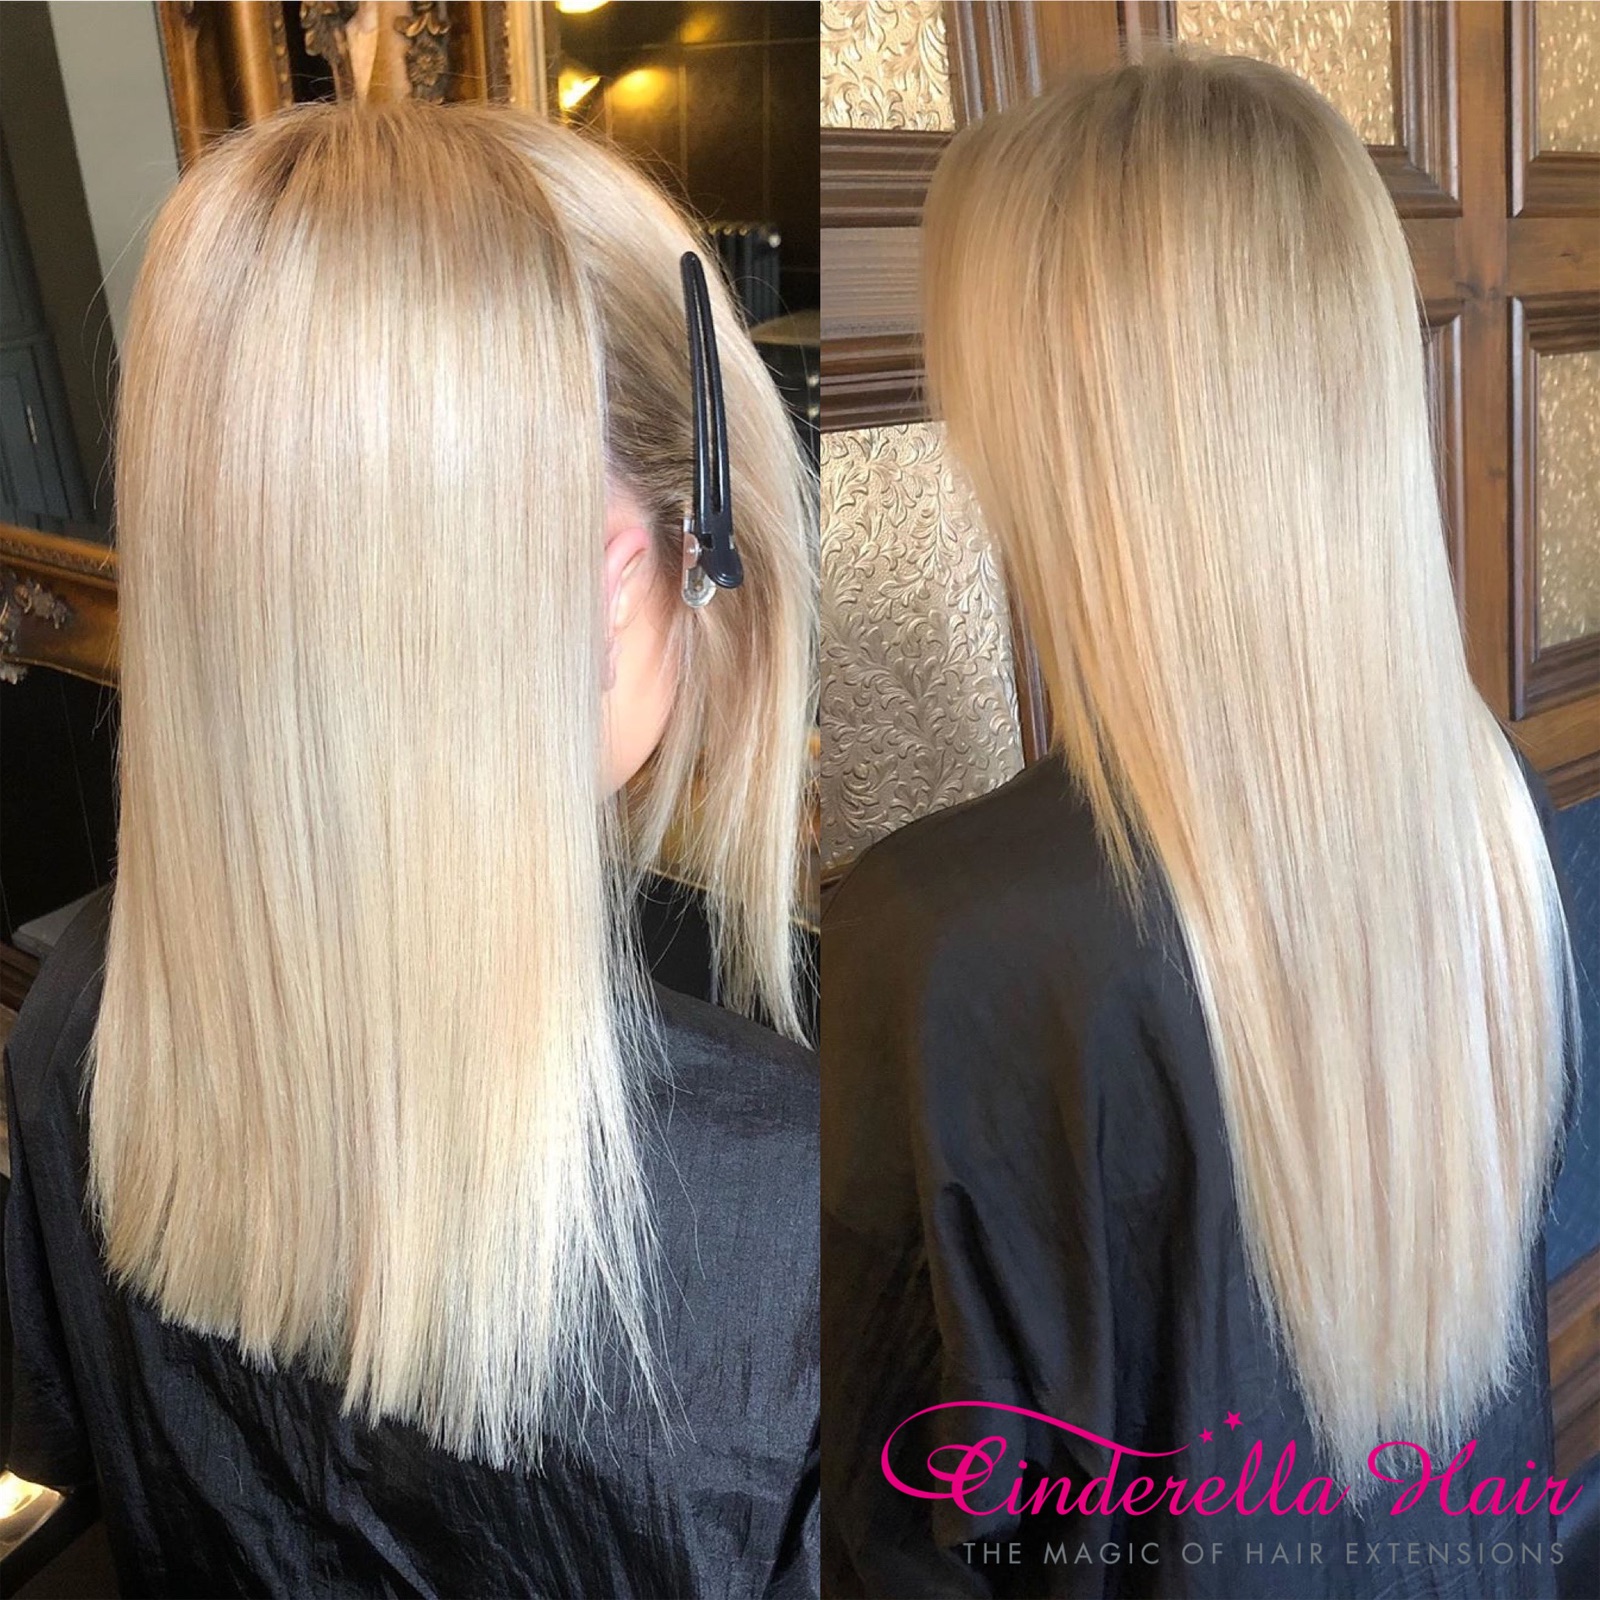 Cinderella Hair Extensions Before After 54 - Cinderella Hair